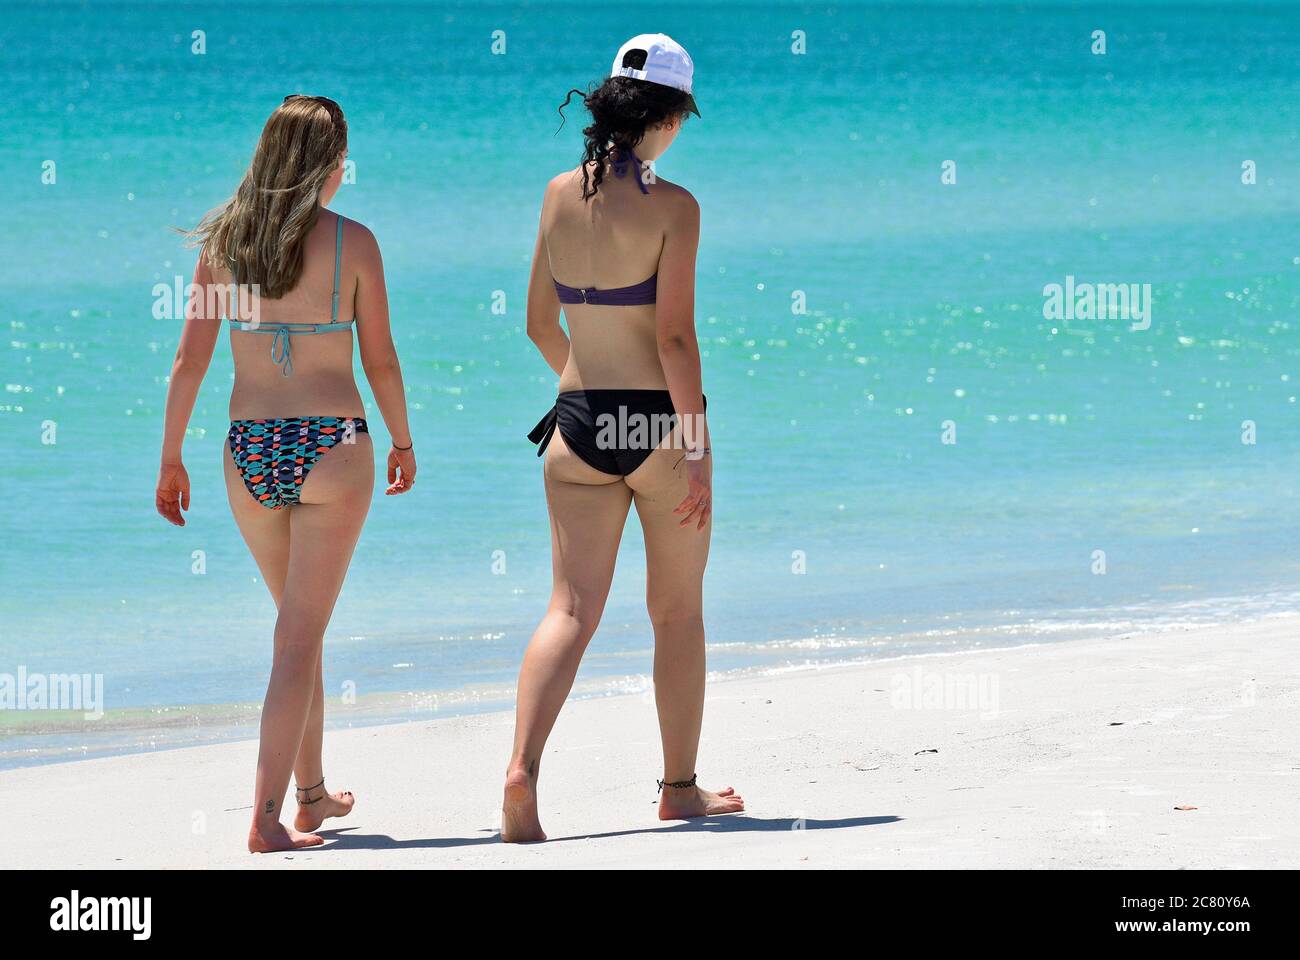 HOLMES BEACH, ANNA MARIA ISLAND, FL / USA - May 1, 2018: Two Young Women taking a leisure walk on the Beach enjoying a Beautiful Summer Day. Stock Photo